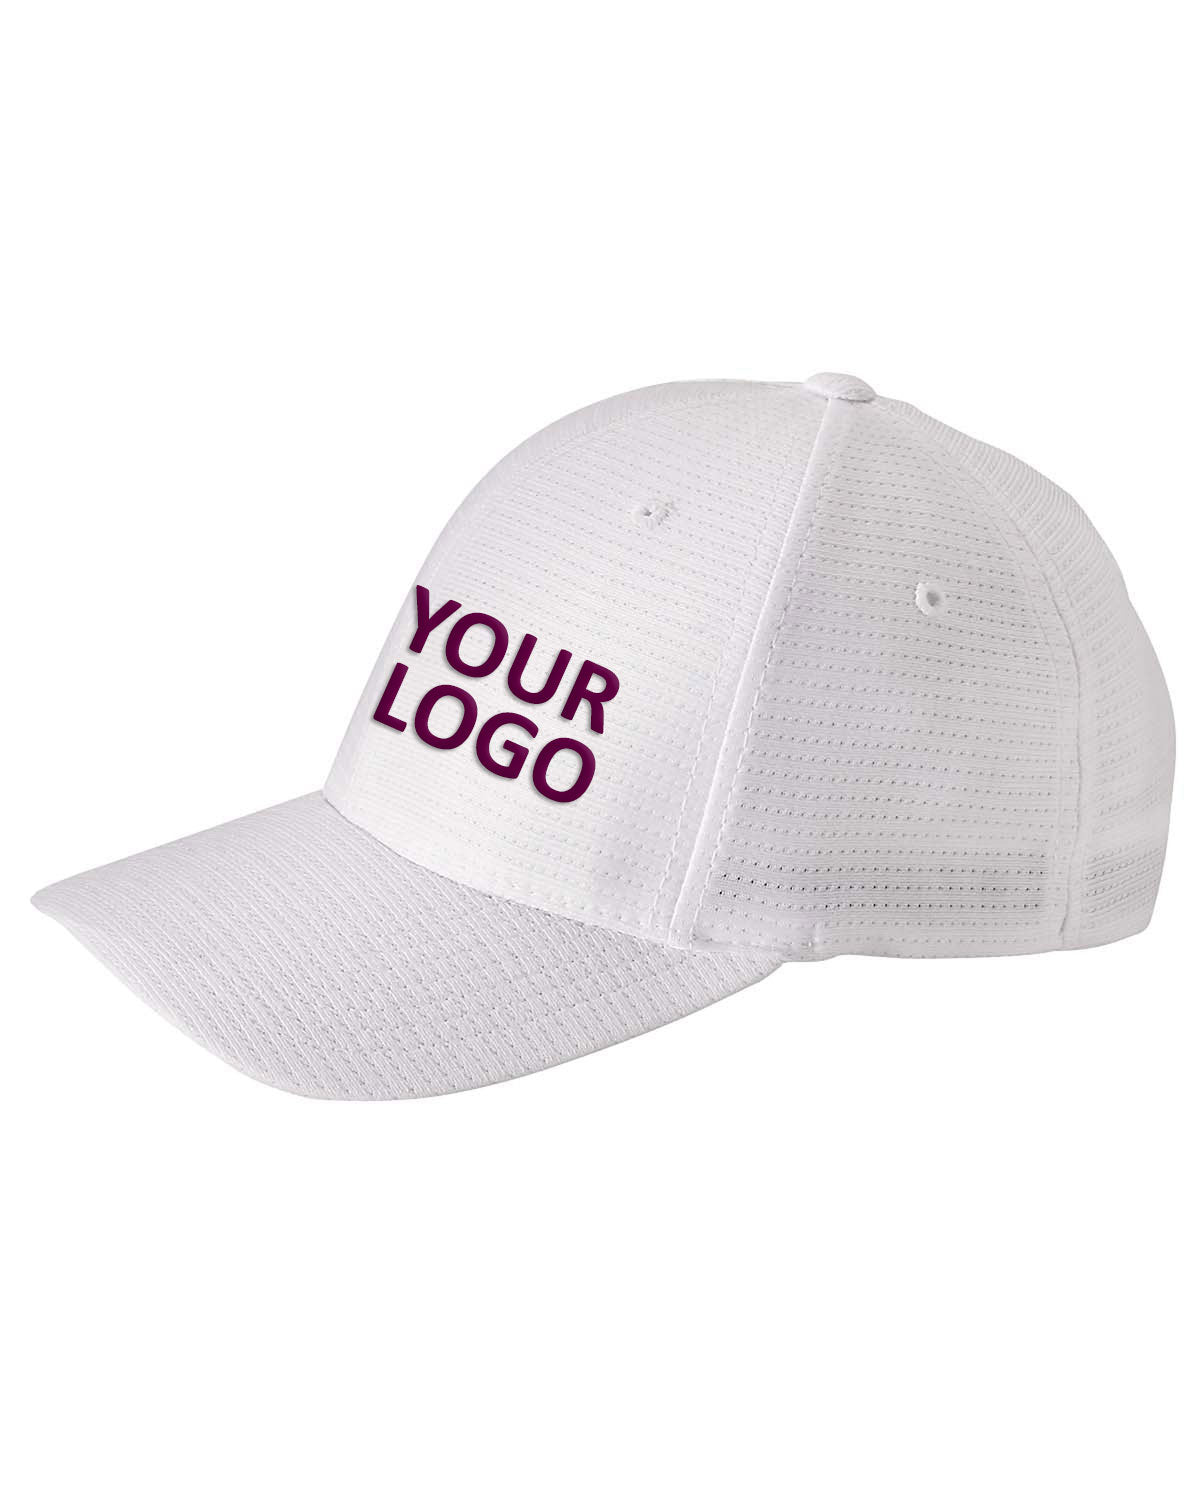 flexfit_6572_white_company_logo_headwear